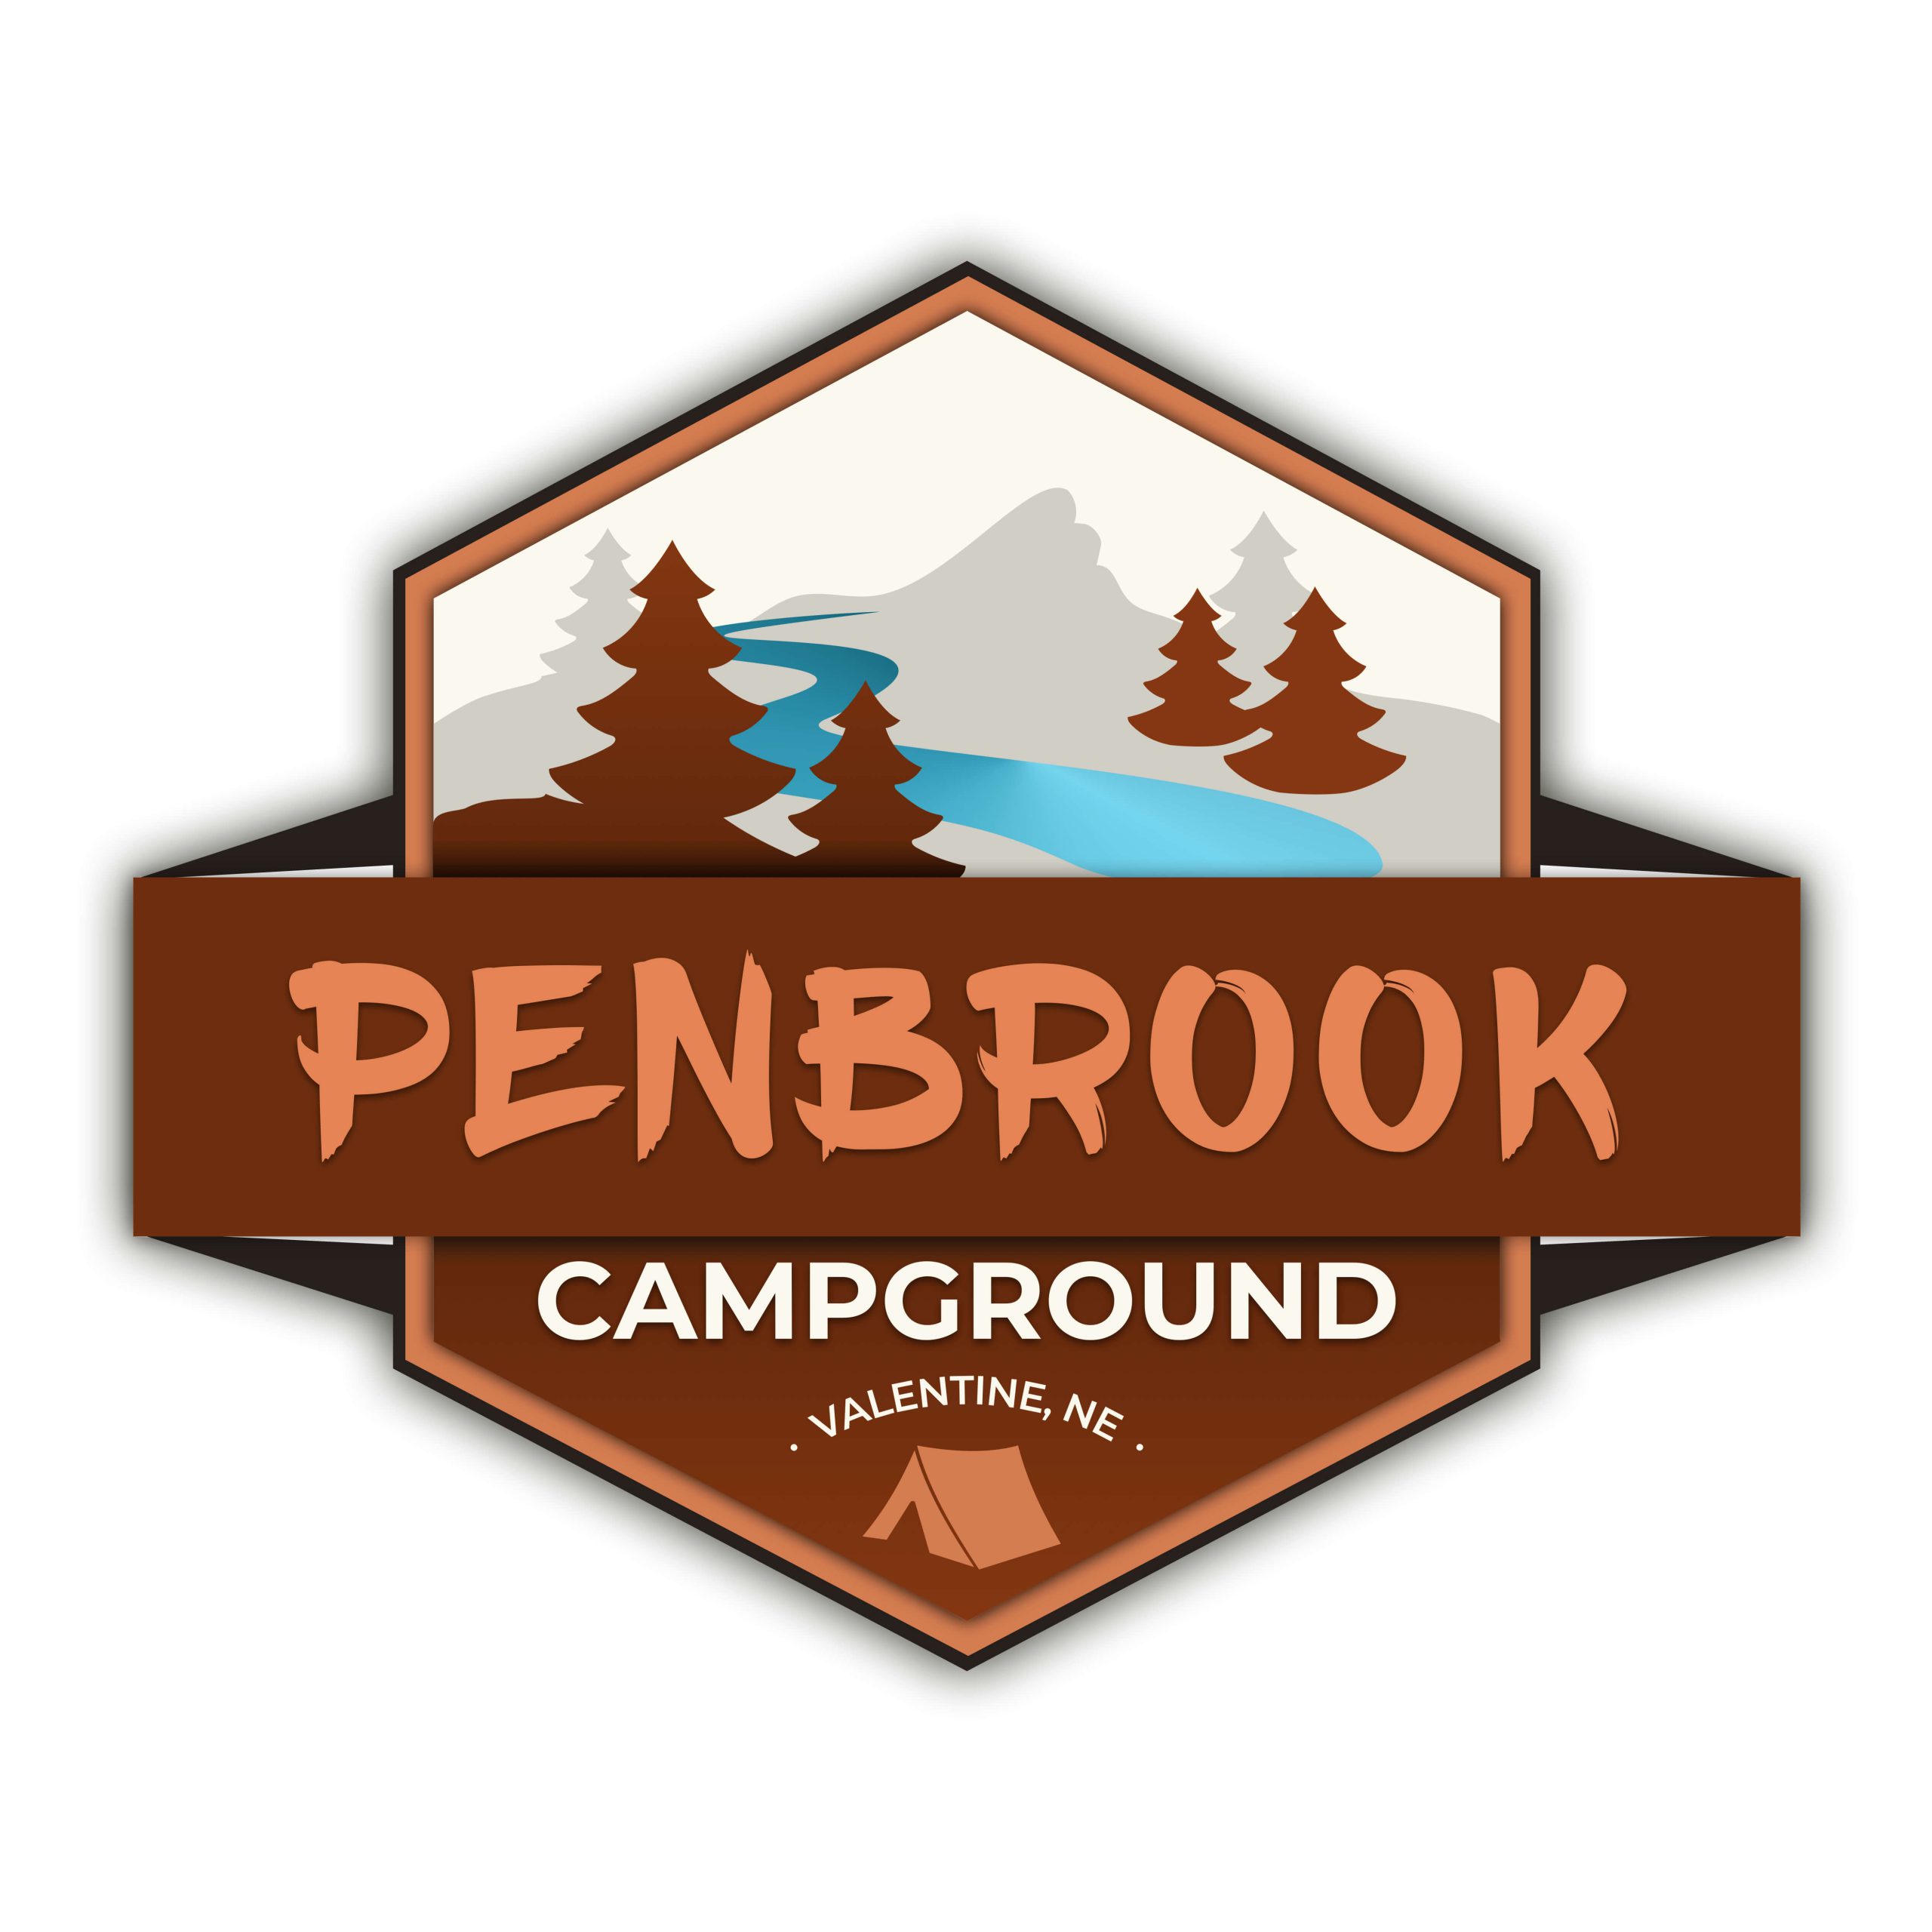 Niobrara Camping- Penbrook, with Shades of brown and trees and river